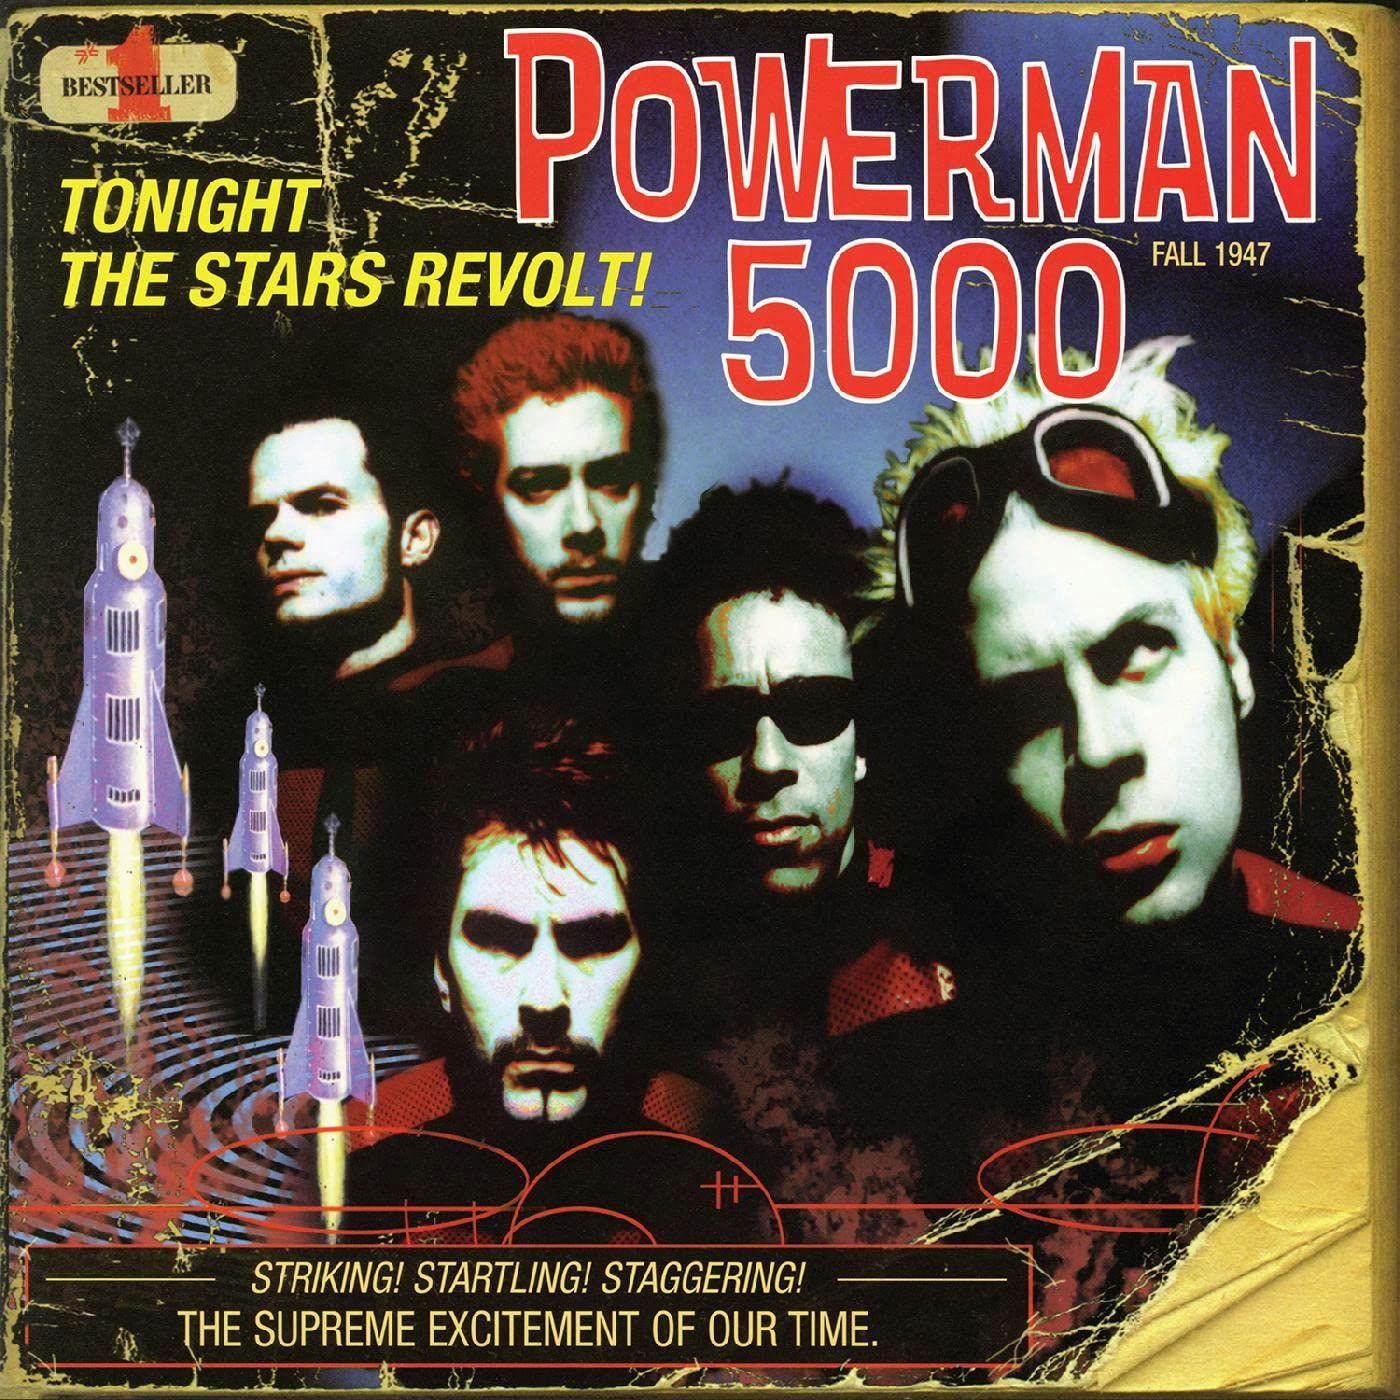 Powerman 5000 Tonight The Stars Revolt (Coke Clear With Bright Yellow Streaks) Vinyl Record